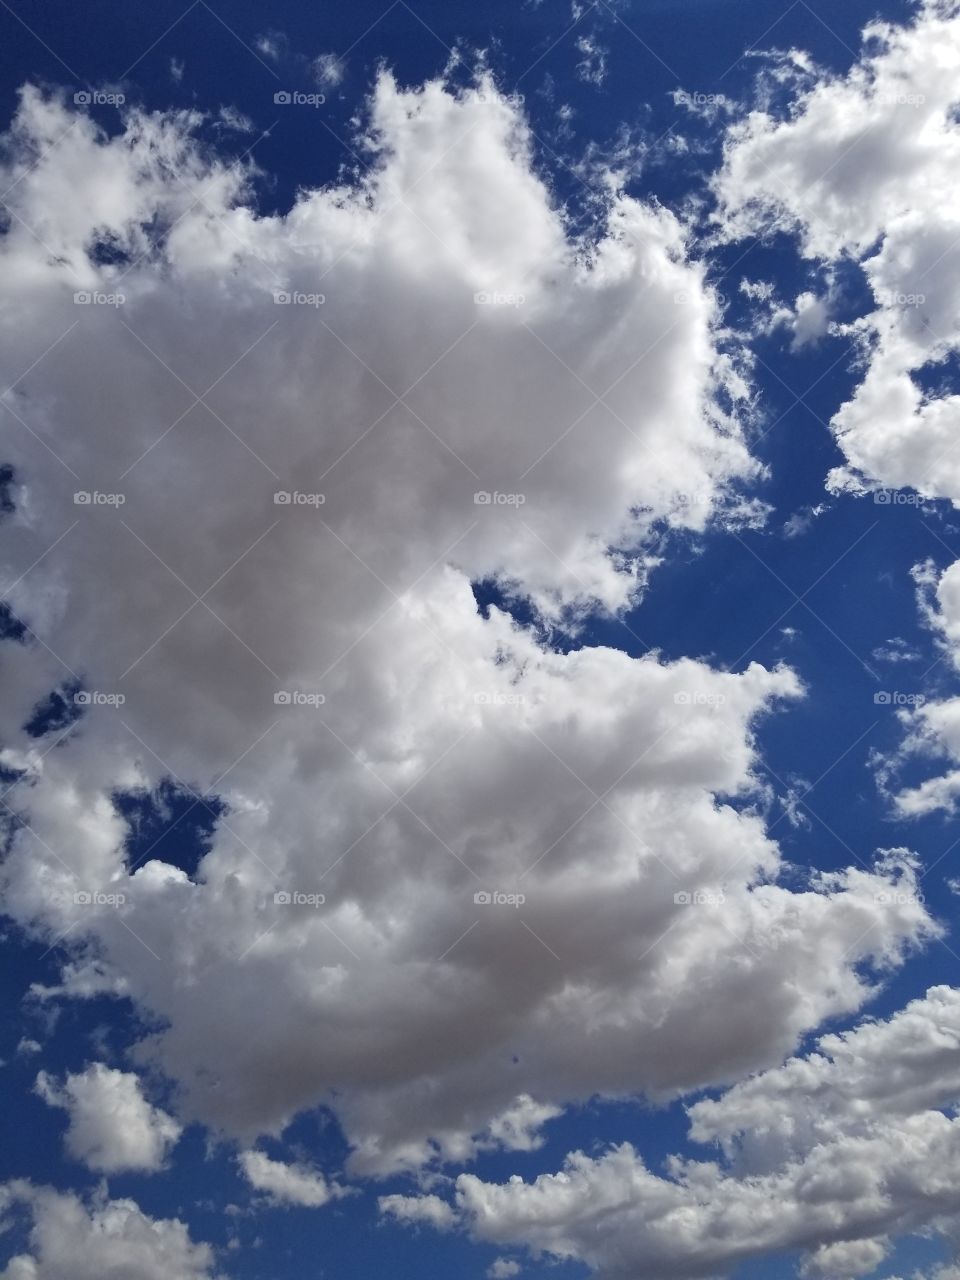 October Sky in Las Vegas 2018